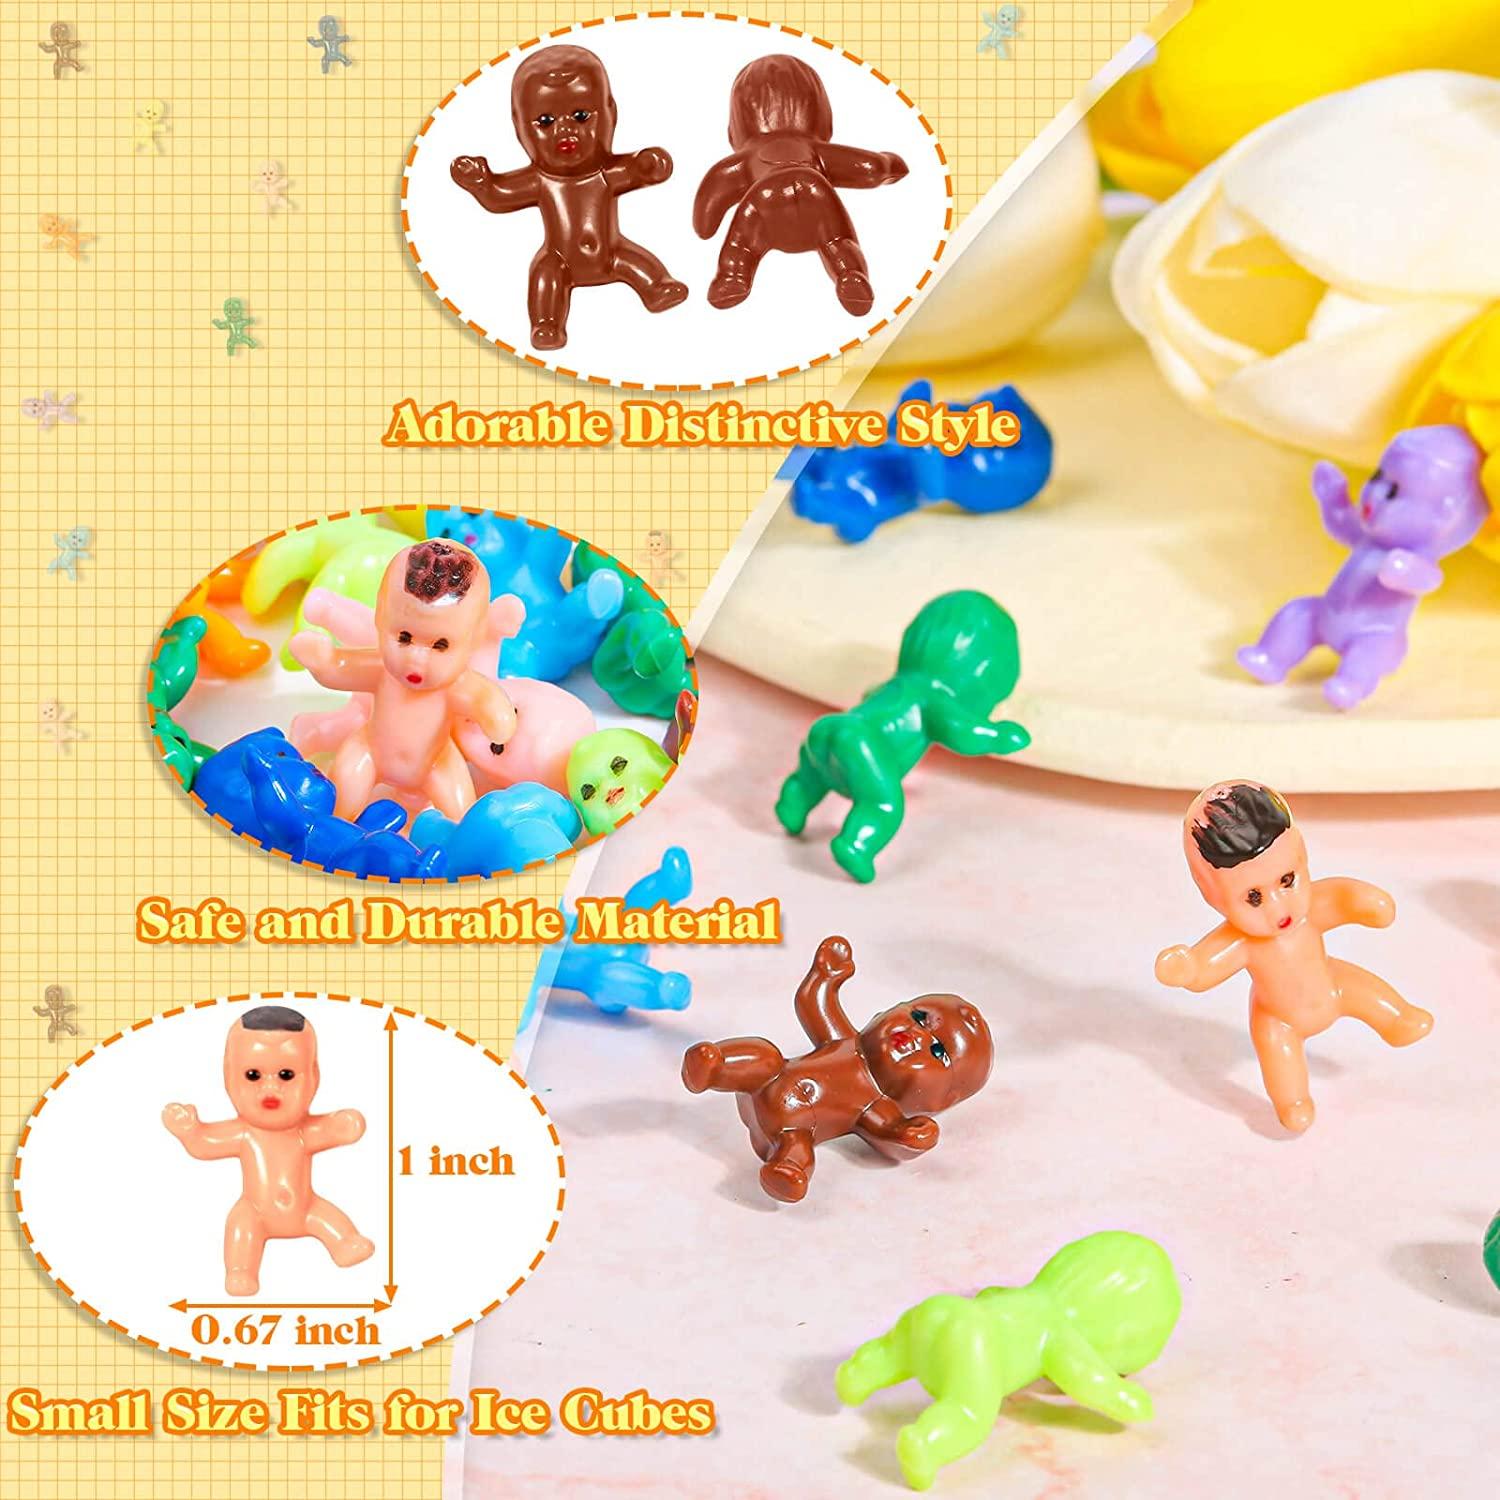 Mini Plastic Babies, Selizo 100pcs Tiny Plastic Baby Figurines